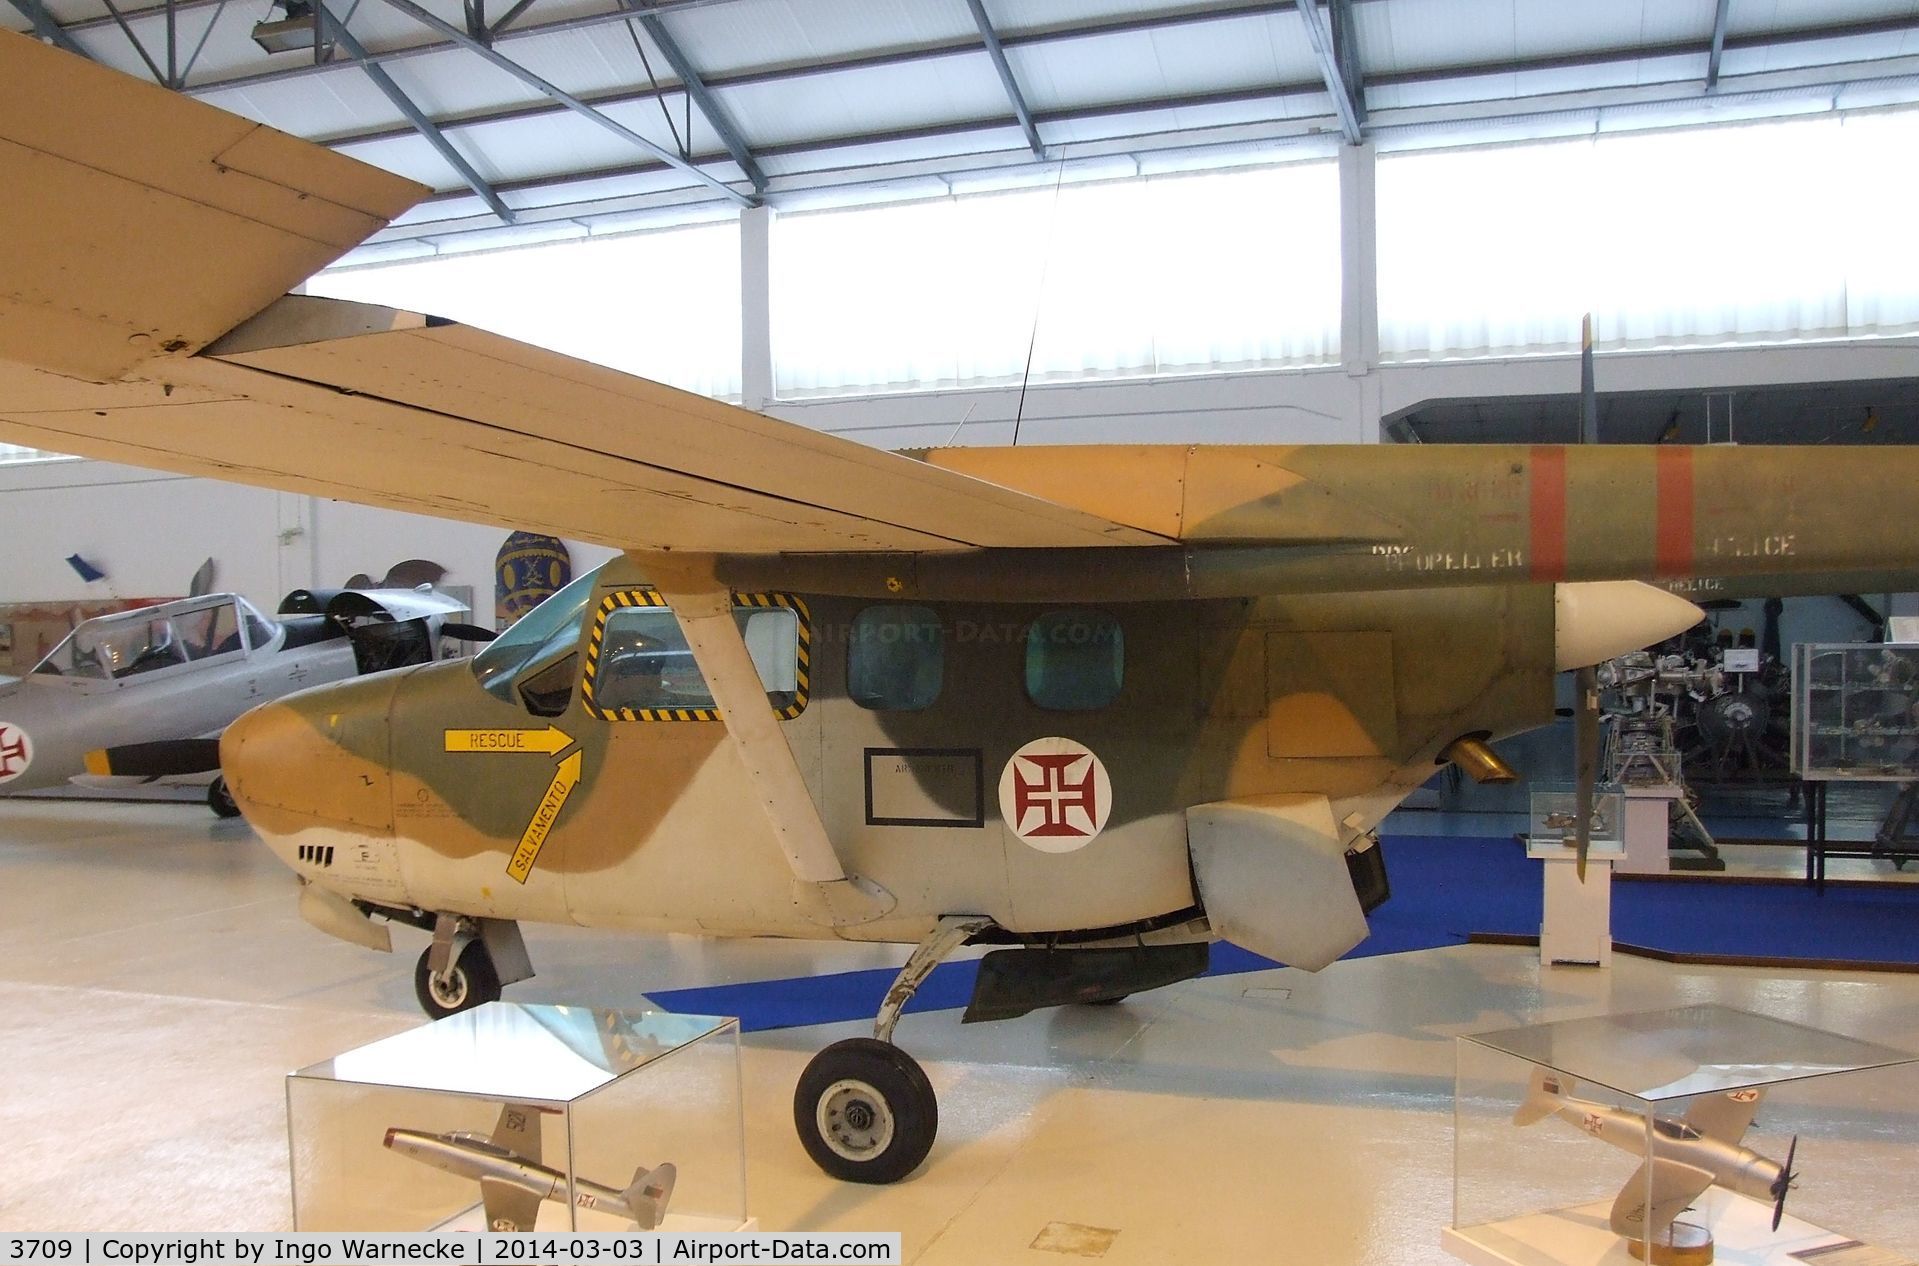 3709, Reims FTB337G C/N 0010, Cessna (Reims) FTB337G Milirole at the Museu do Ar, Alverca